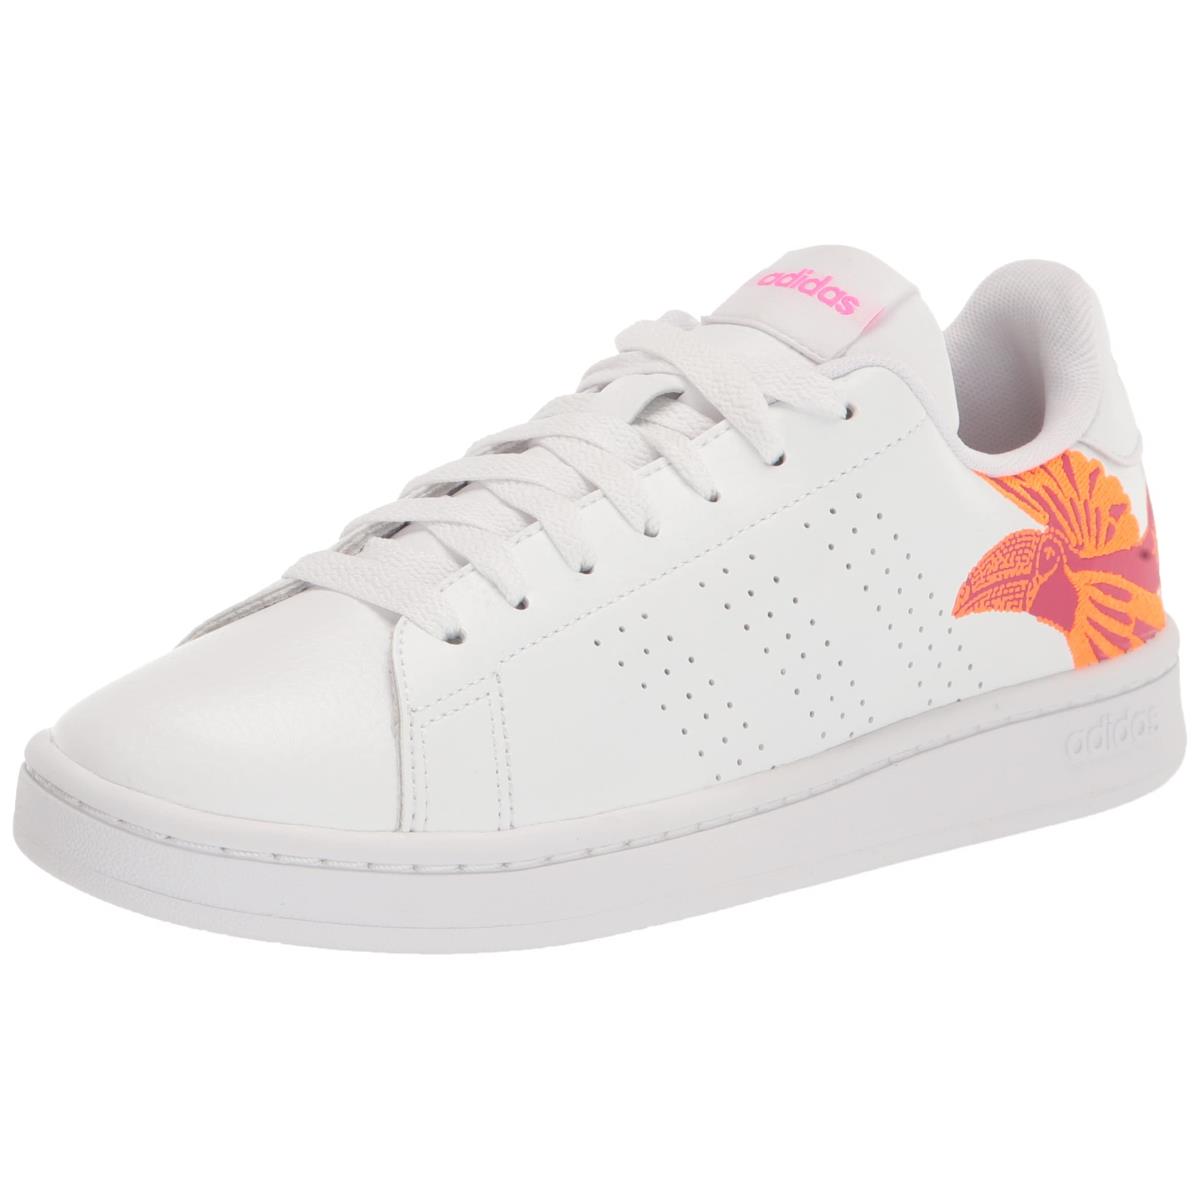 Adidas Women`s Advantage Tennis Shoes Ftwr White/Screaming Pink/Ftwr White